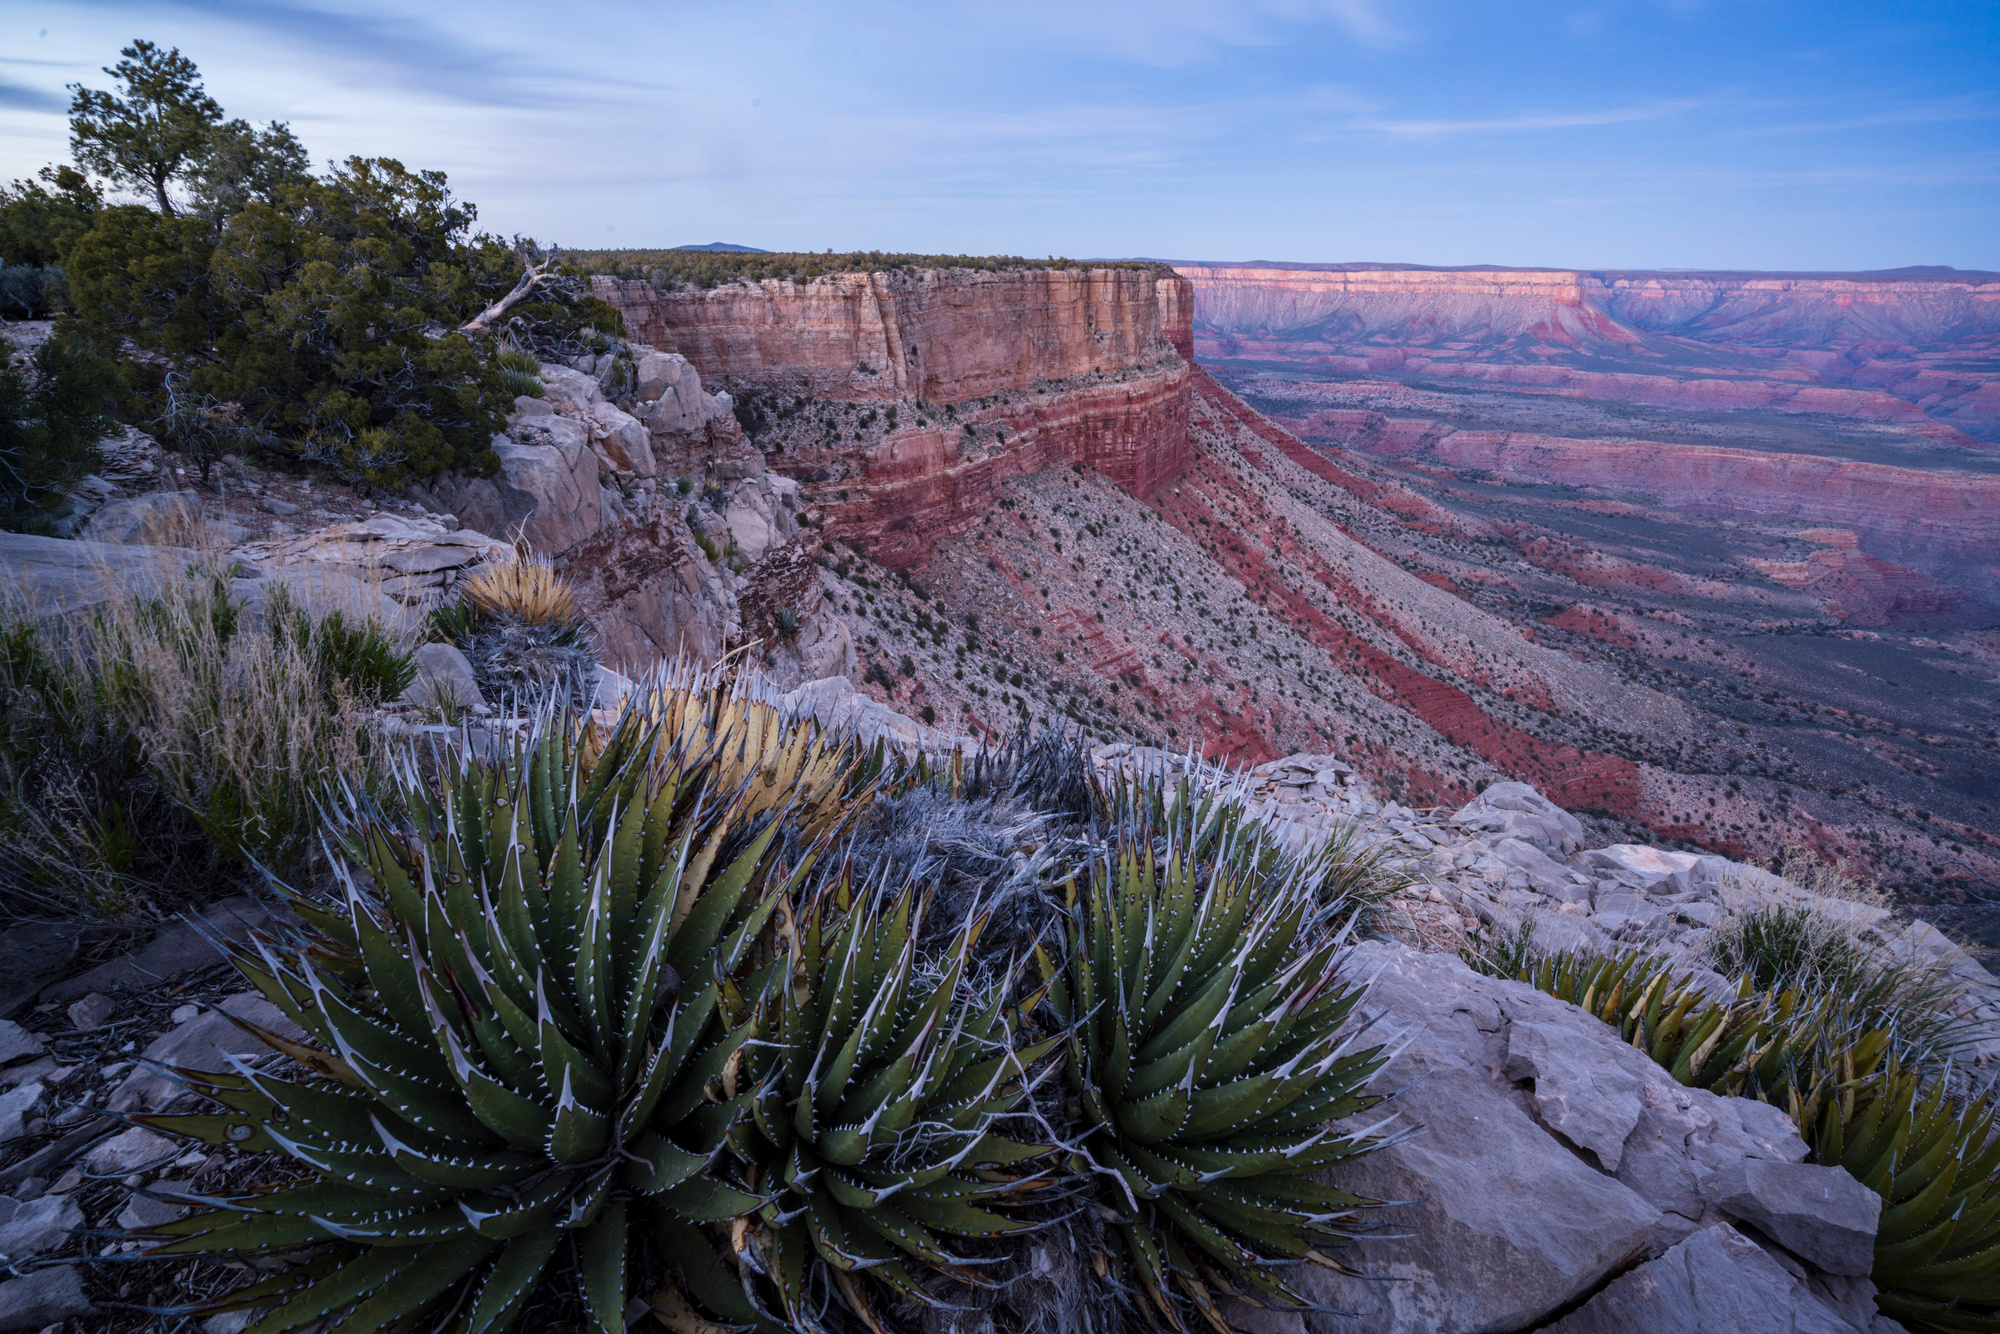 Twin Point, Grand Canyon-Parashant National Monument, Arizona